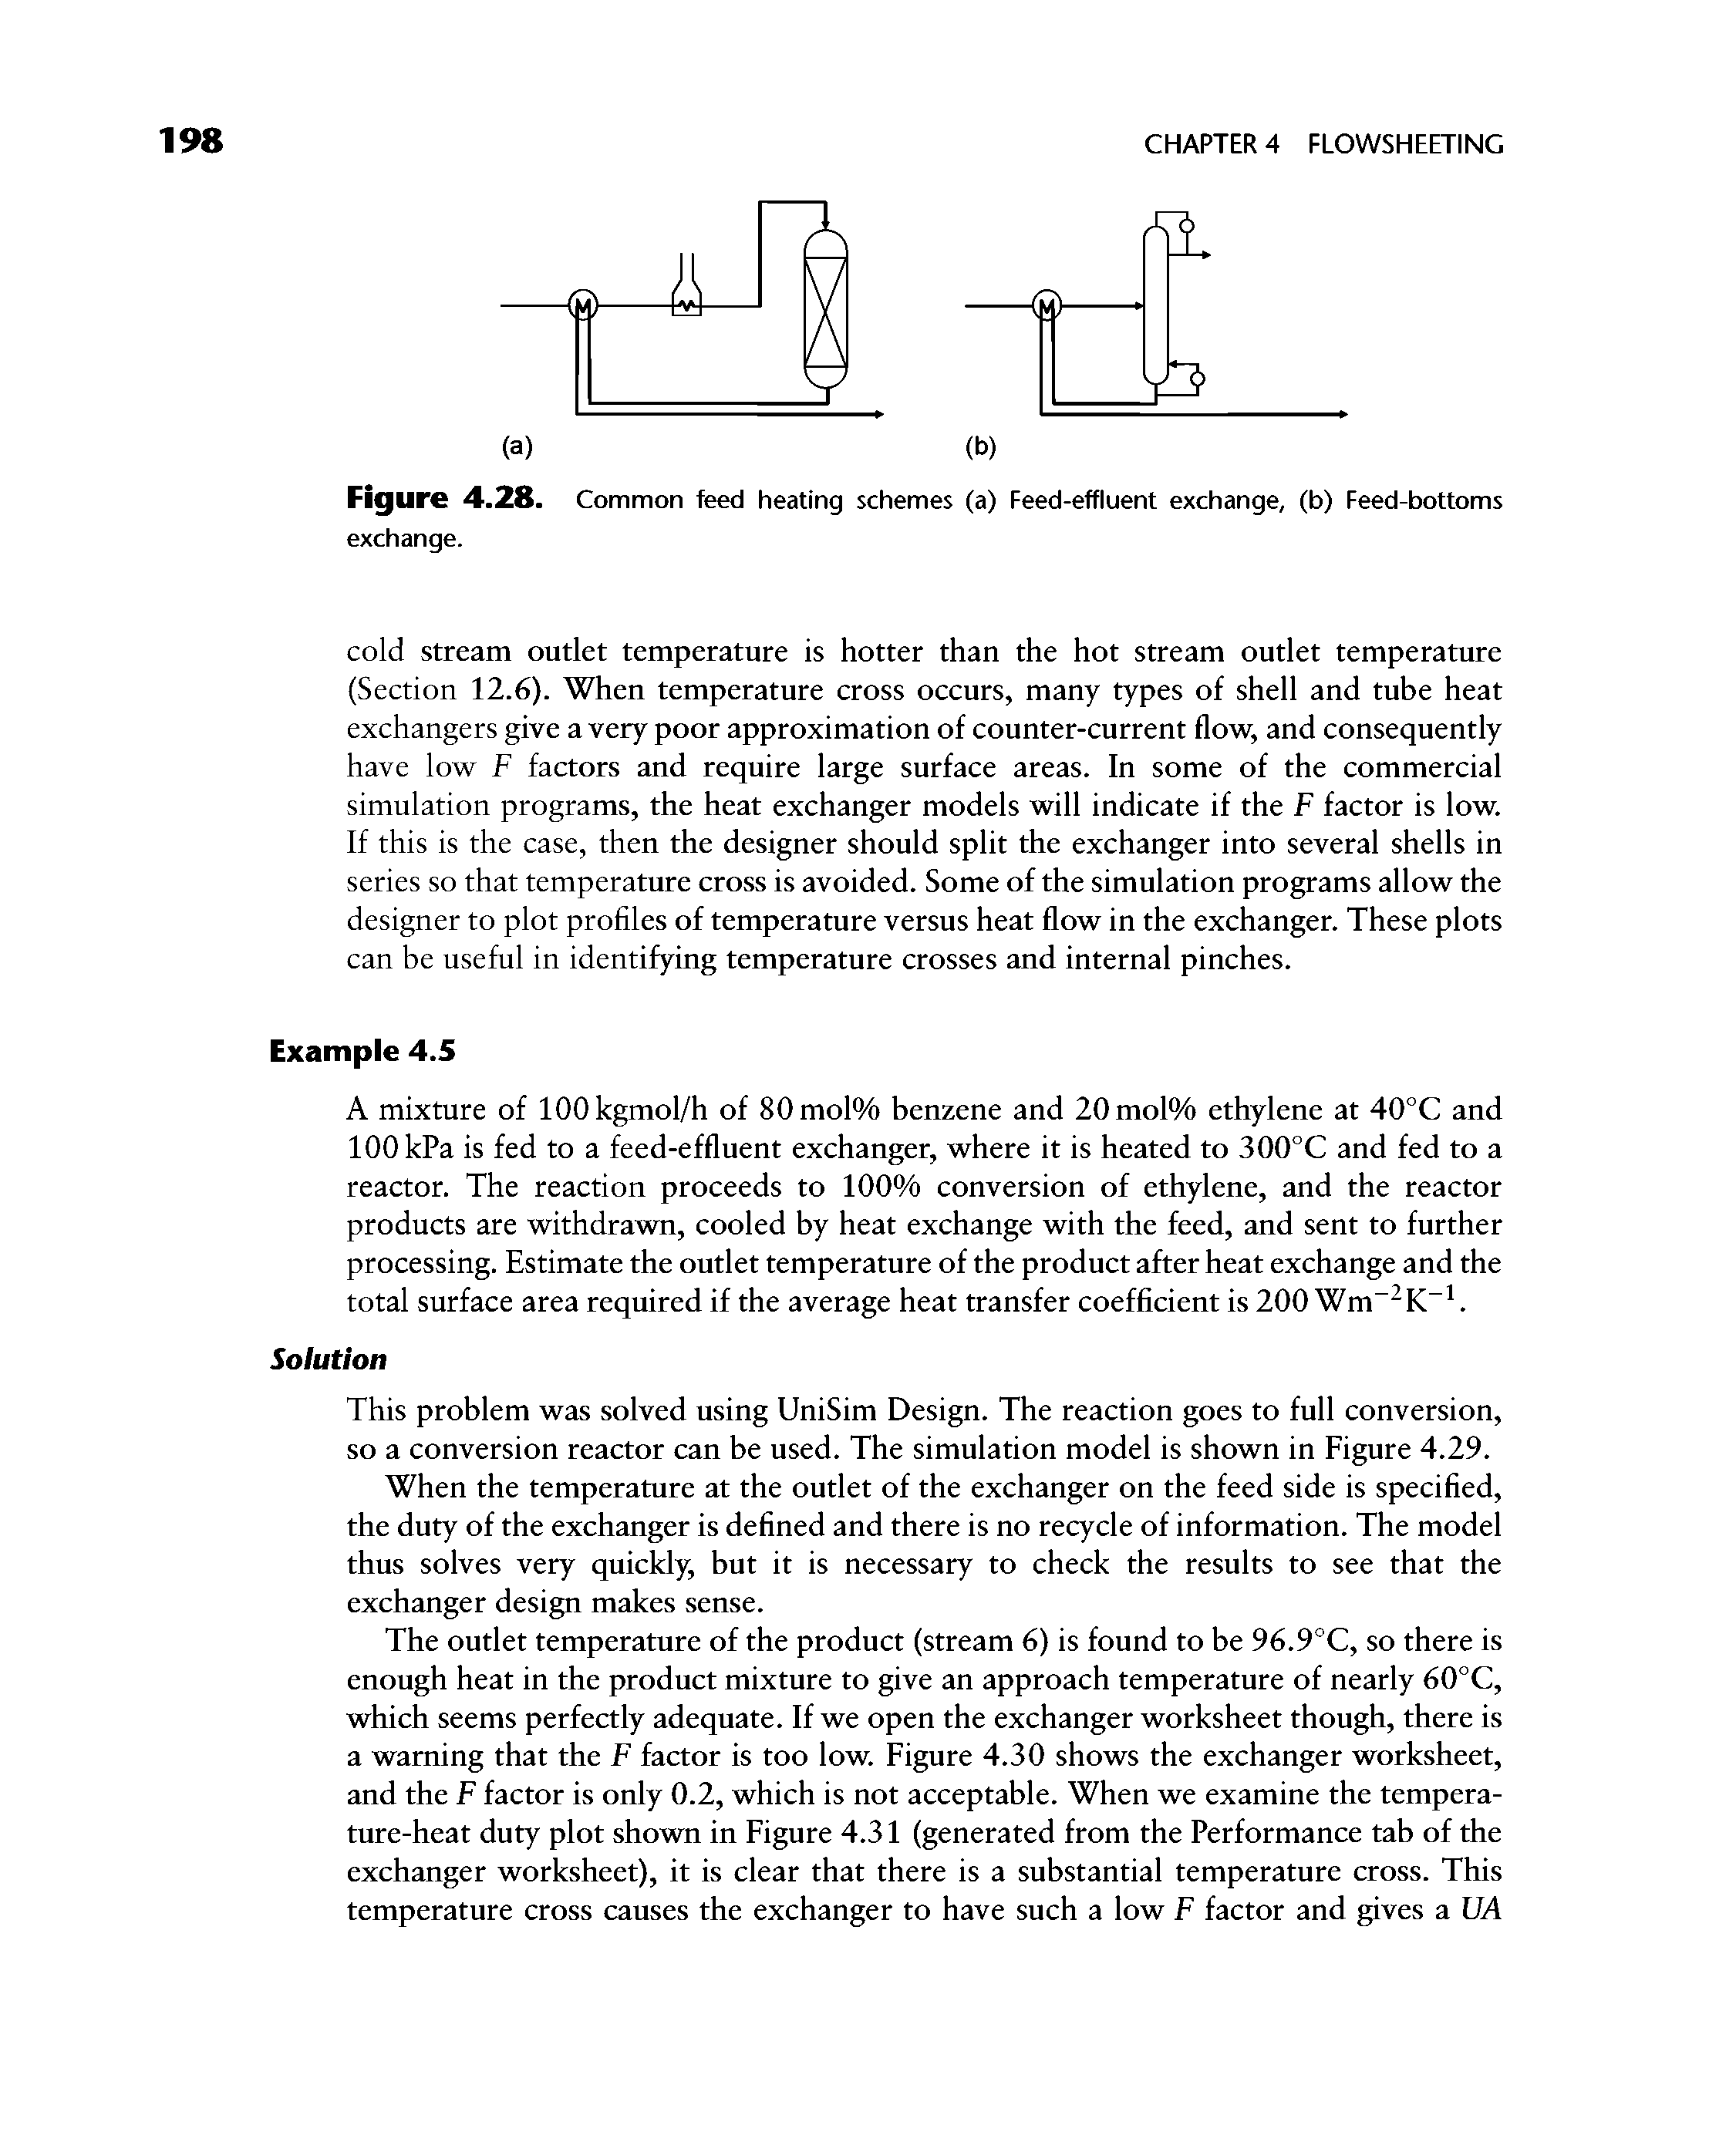 Figure 4.28. Common feed heating schemes (a) Feed-effluent exchange, (b) Feed-bottoms exchange.